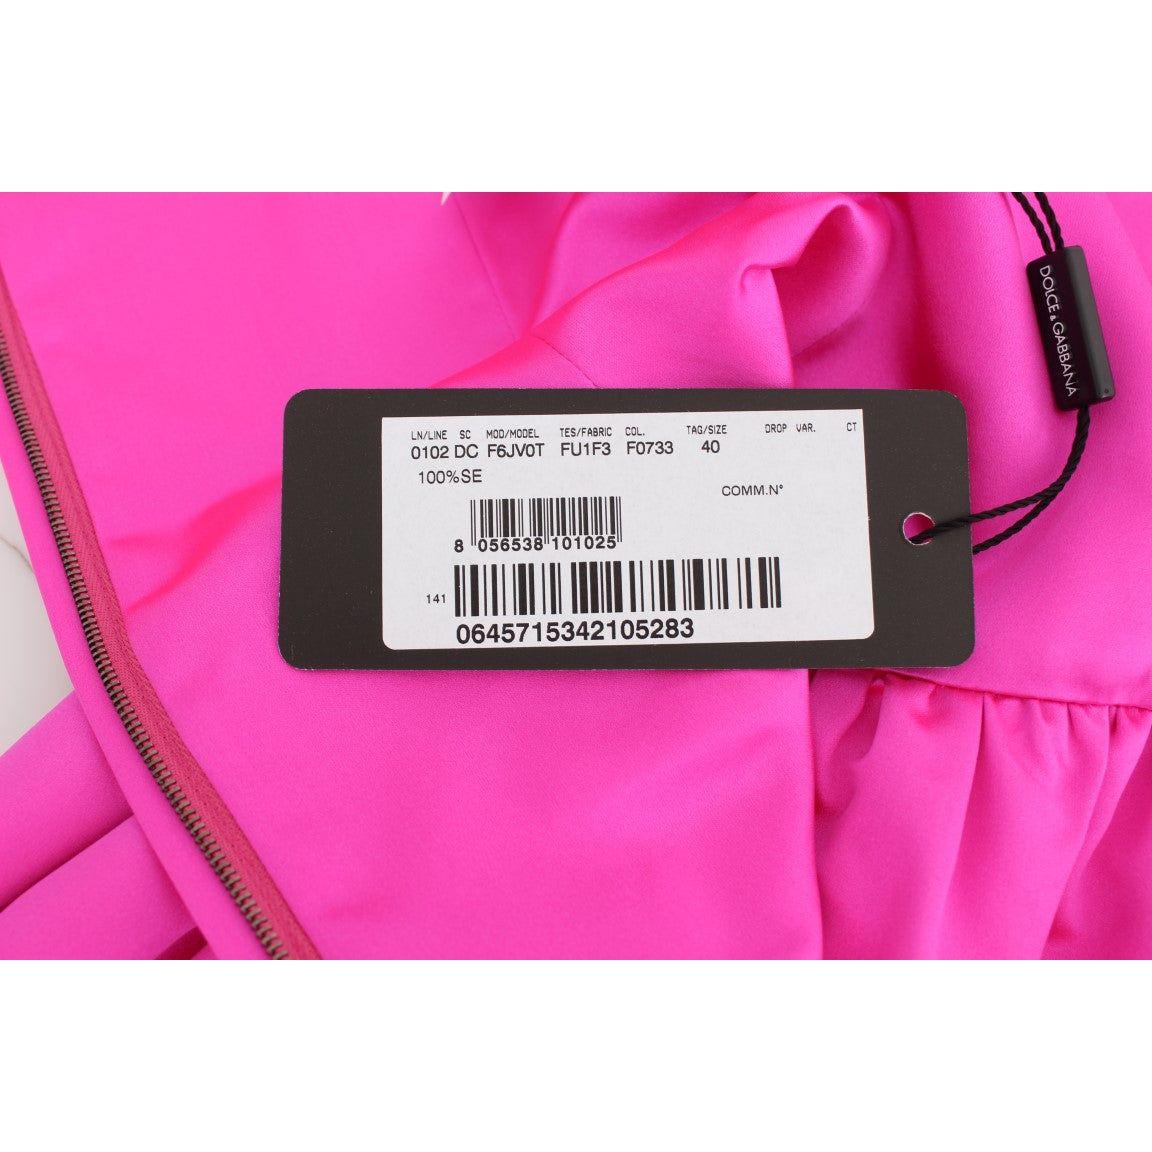 Dolce & Gabbana Elegant Silk Full Length Pink Sheath Dress pink-silk-long-sheath-ball-gown-dress 76495-pink-silk-long-sheath-ball-gown-dress-7.jpg